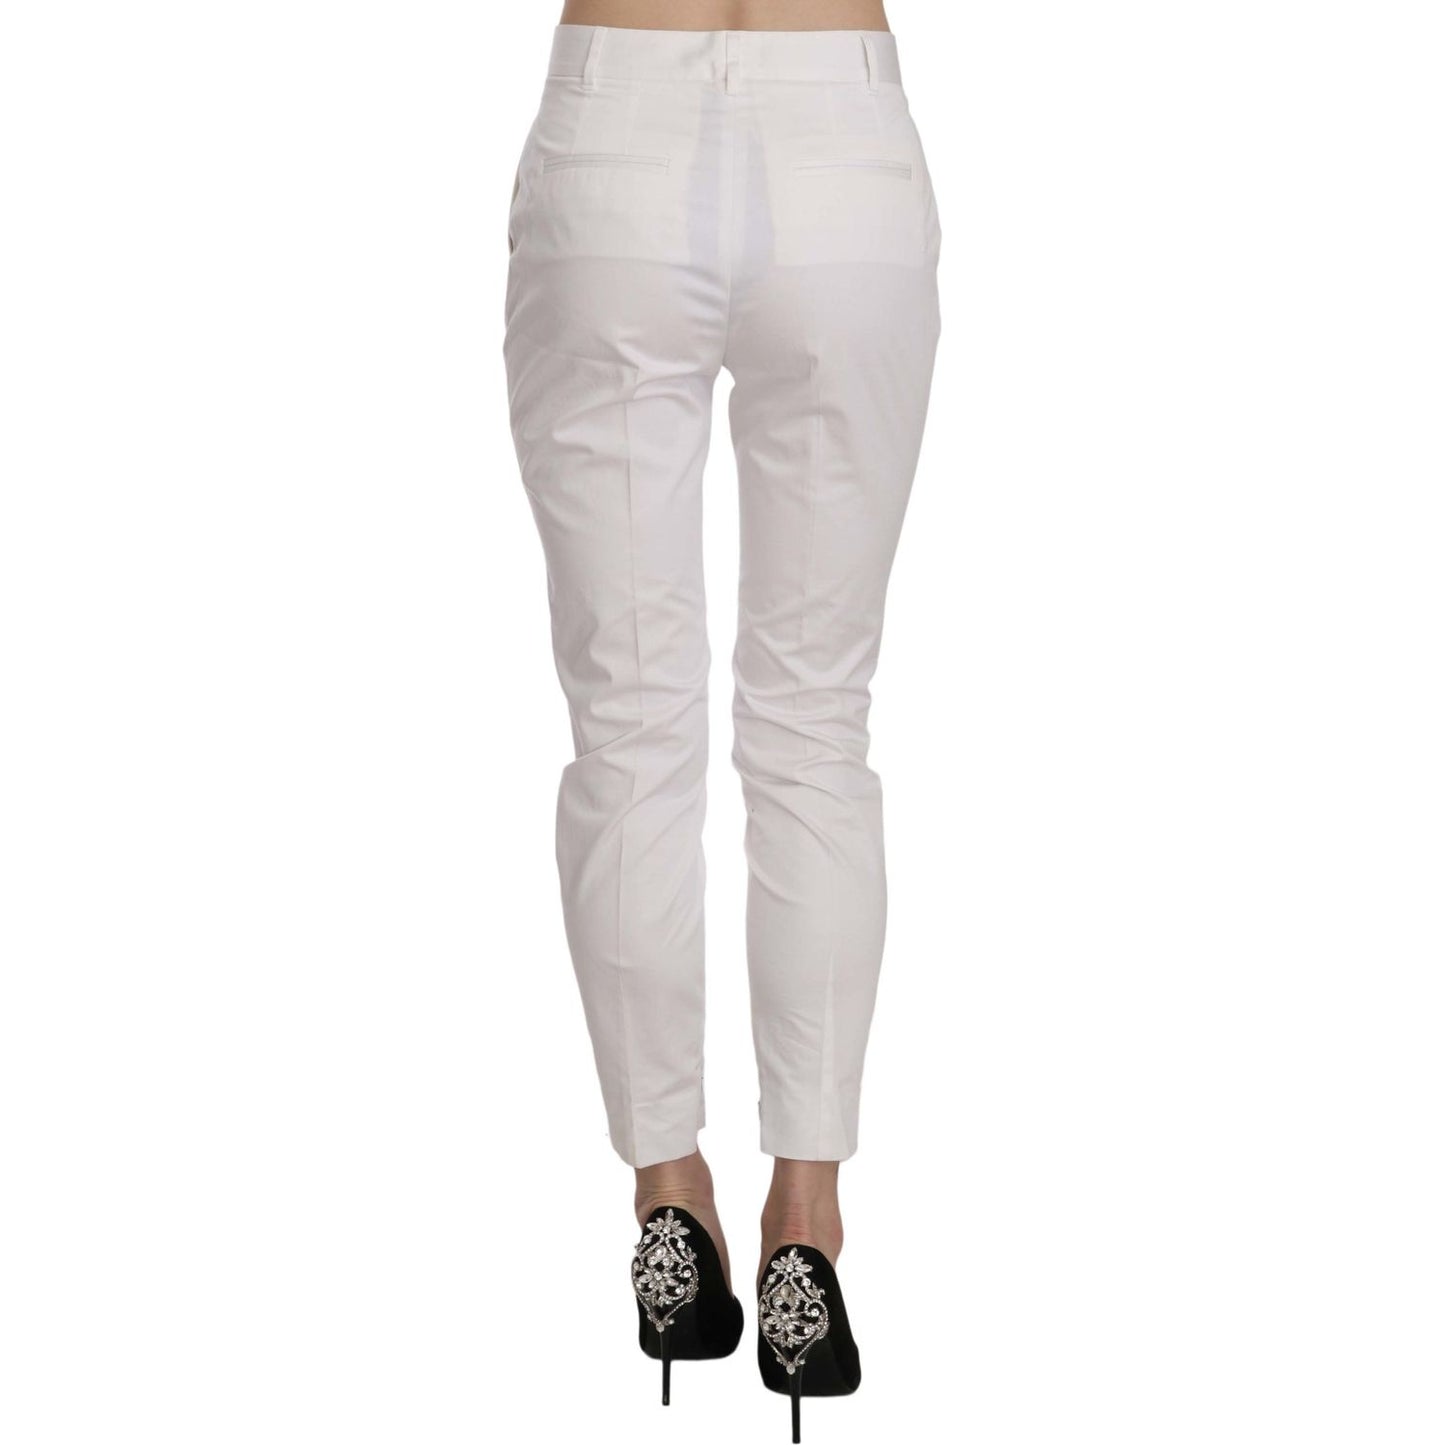 Dolce & Gabbana Elegant White Cotton Blend Trousers white-high-waist-skinny-cropped-trouser-pants